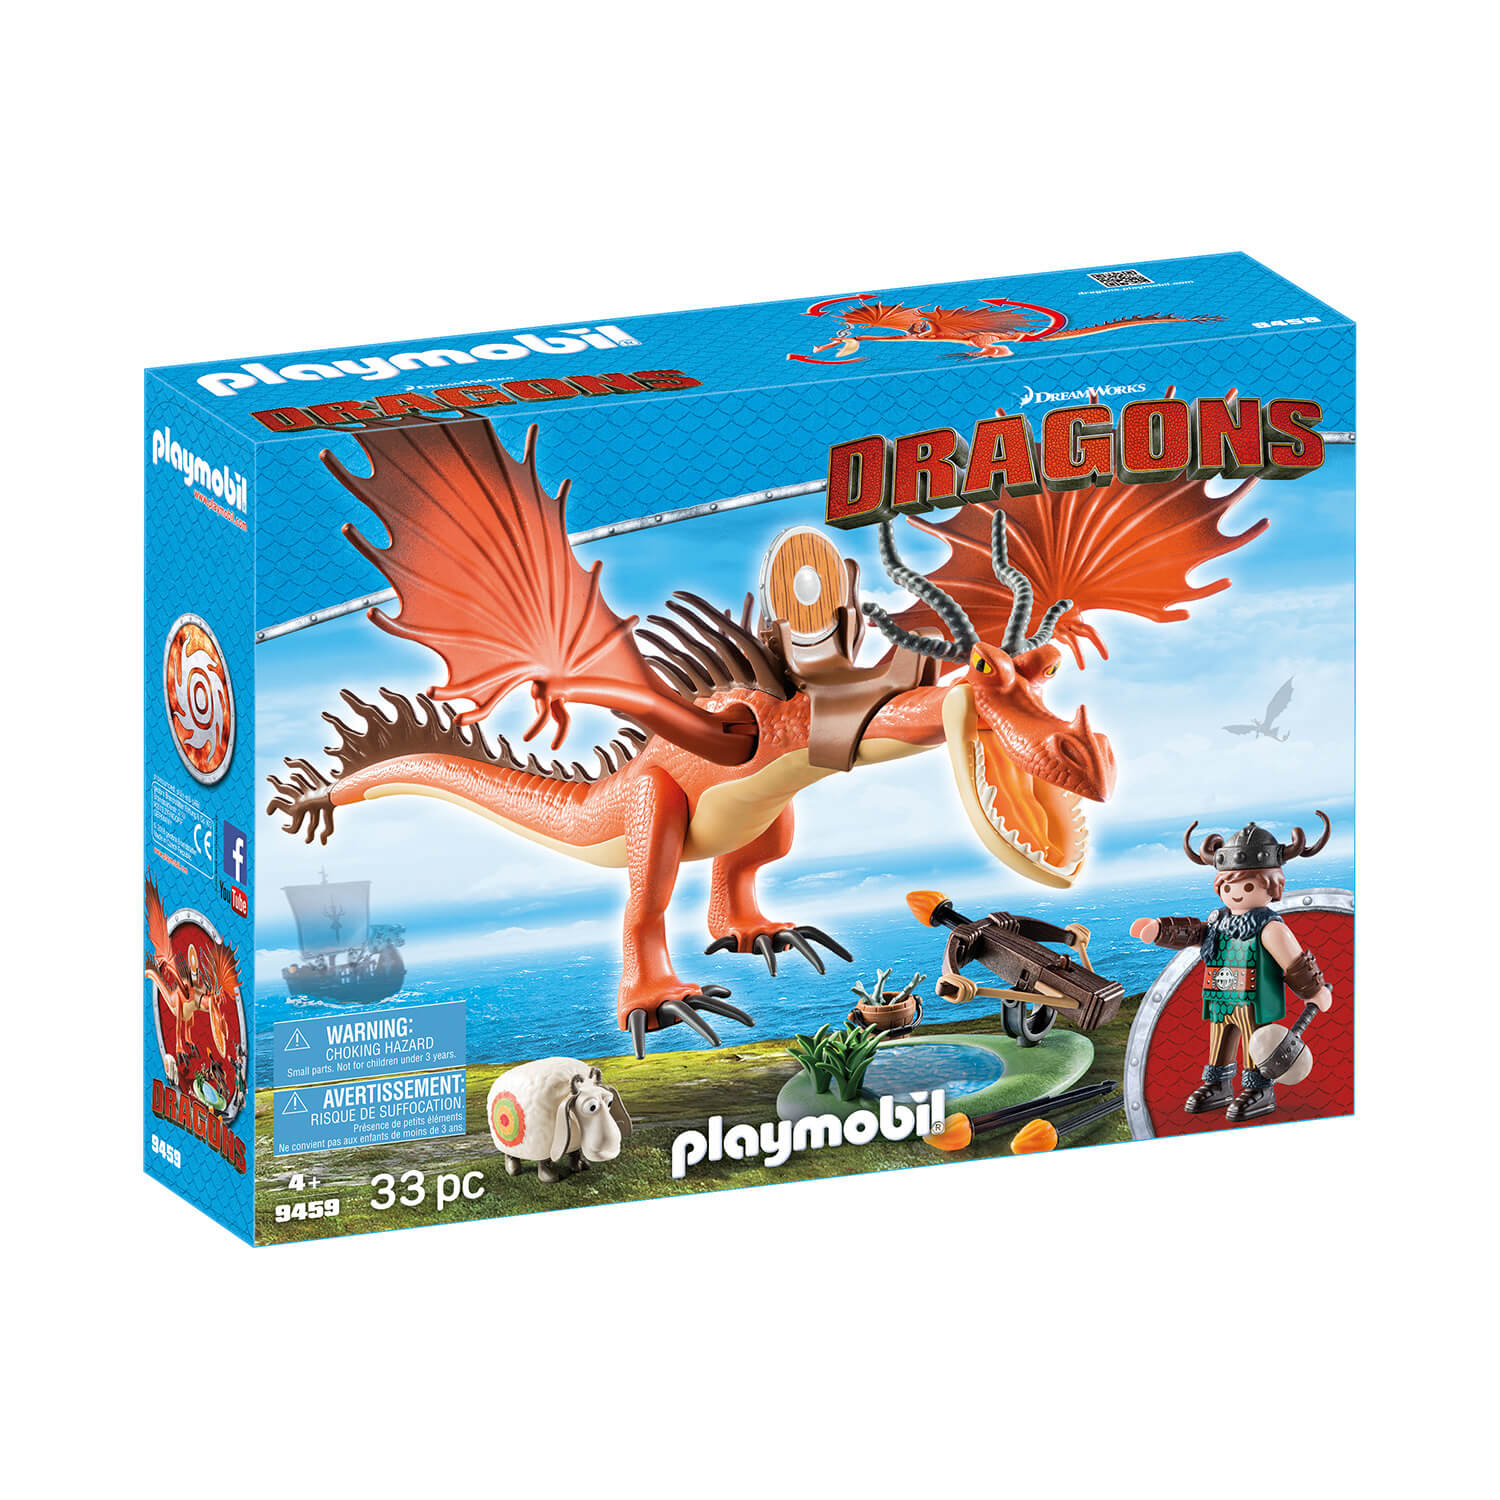 PLAYMOBIL DreamWorks Dragons II Snotlout and Hookfang (9459)